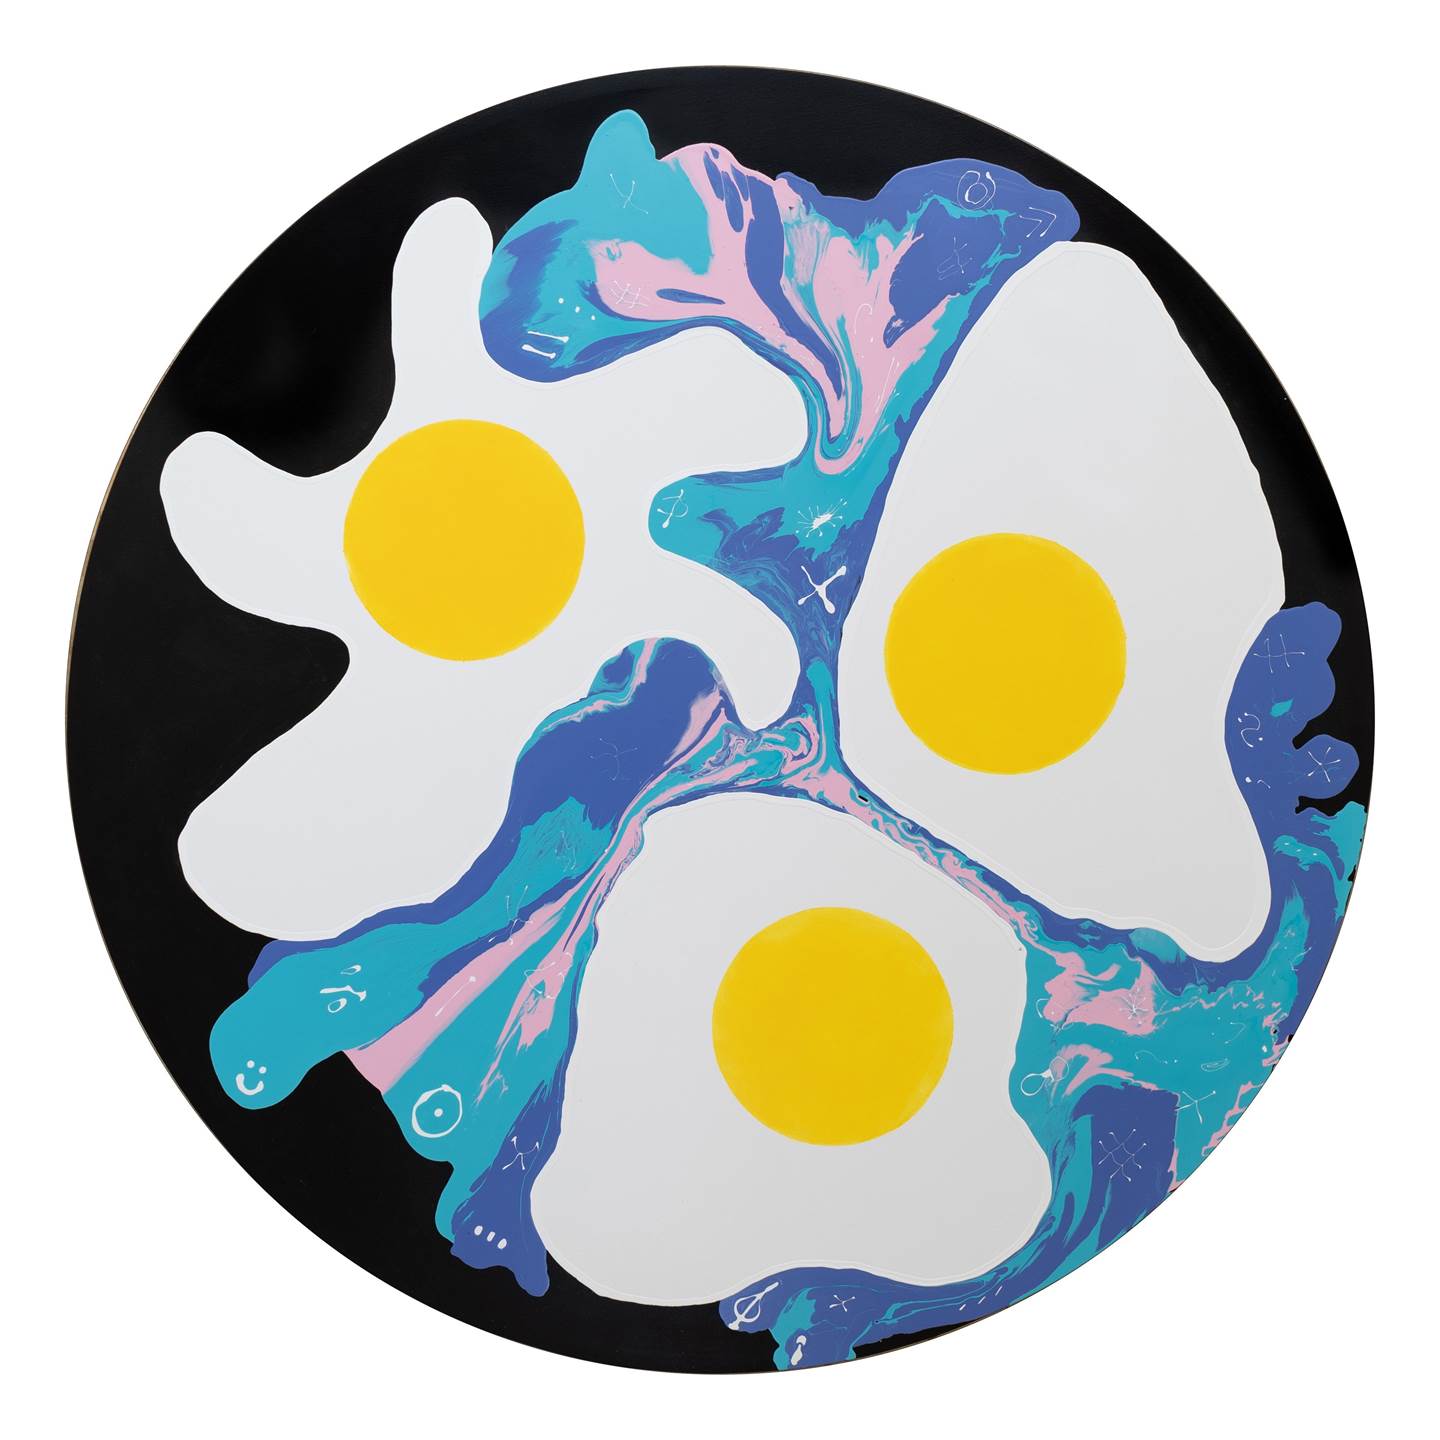 Fried eggs in special character sauce #10, original   La peinture par Mario Louro